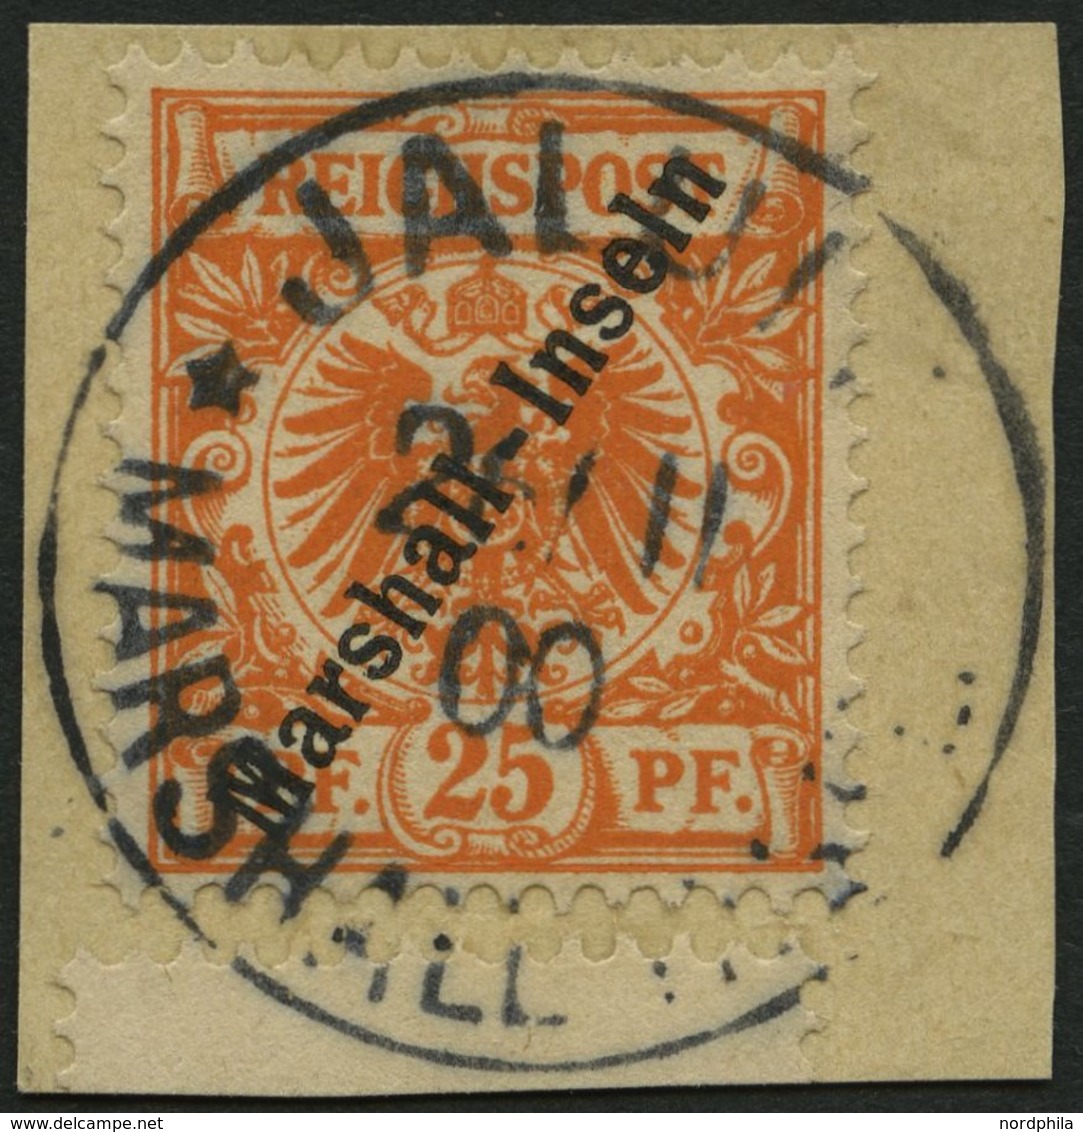 MARSHALL-INSELN 11b BrfStk, 1899, 25 Pf. Dunkelorange, Prachtbriefstück, Gepr. Jäschke-L., Mi. (70.-) - Marshall